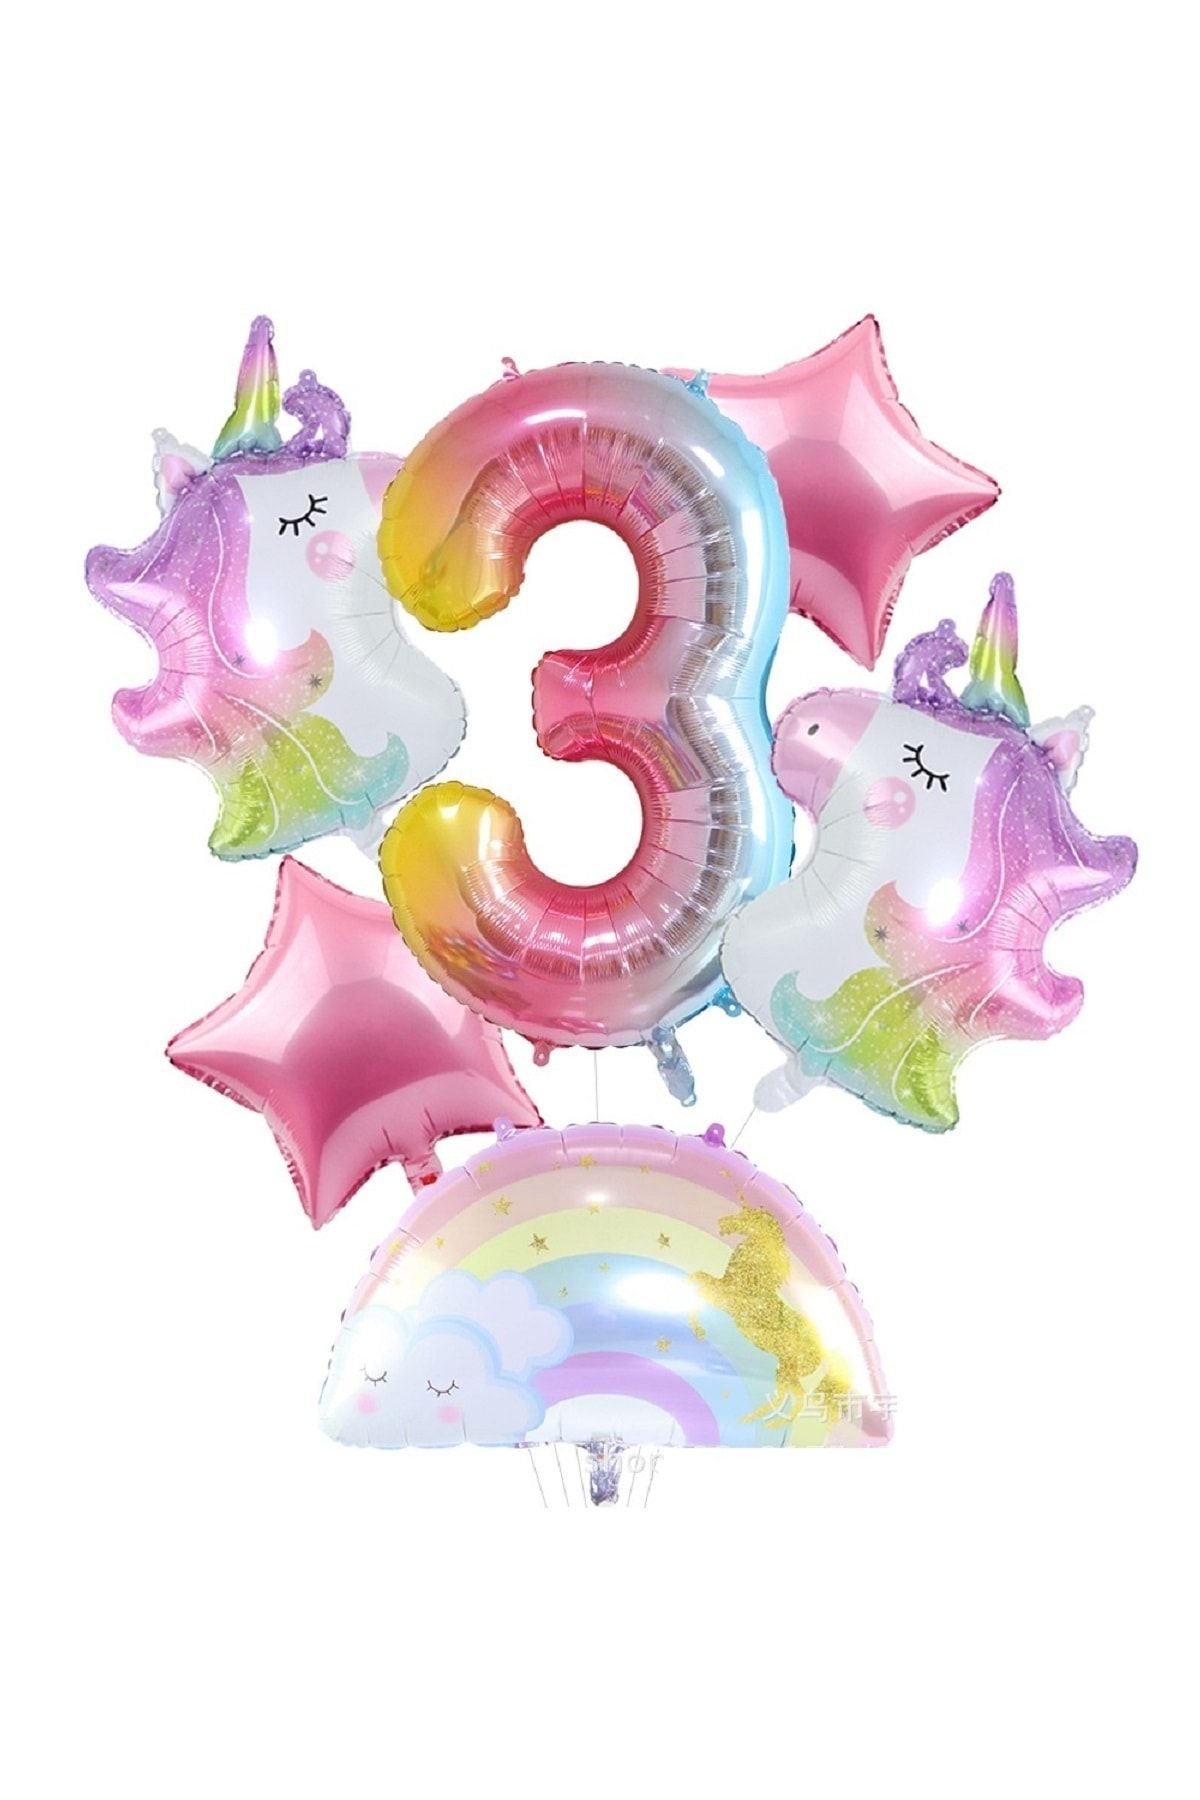 PartiMix Sevimli Unicorn Konsepti 3 Yaş Kız Çocuk Doğum Günü Parti Süsü Balon Seti Folyo Balonları